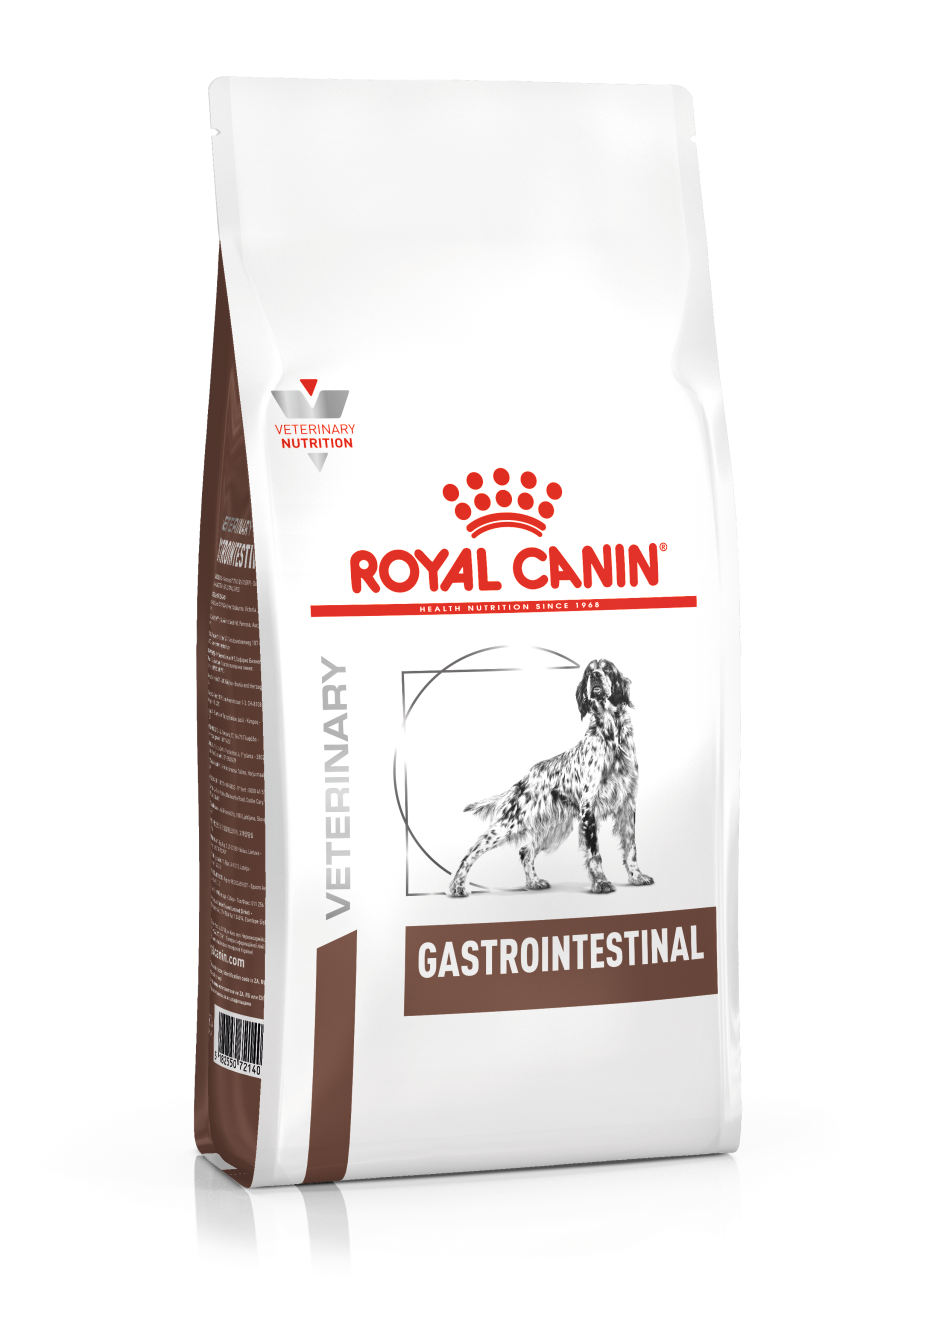 Royal Canin Gastro Intestinal hond 2x 15 kg